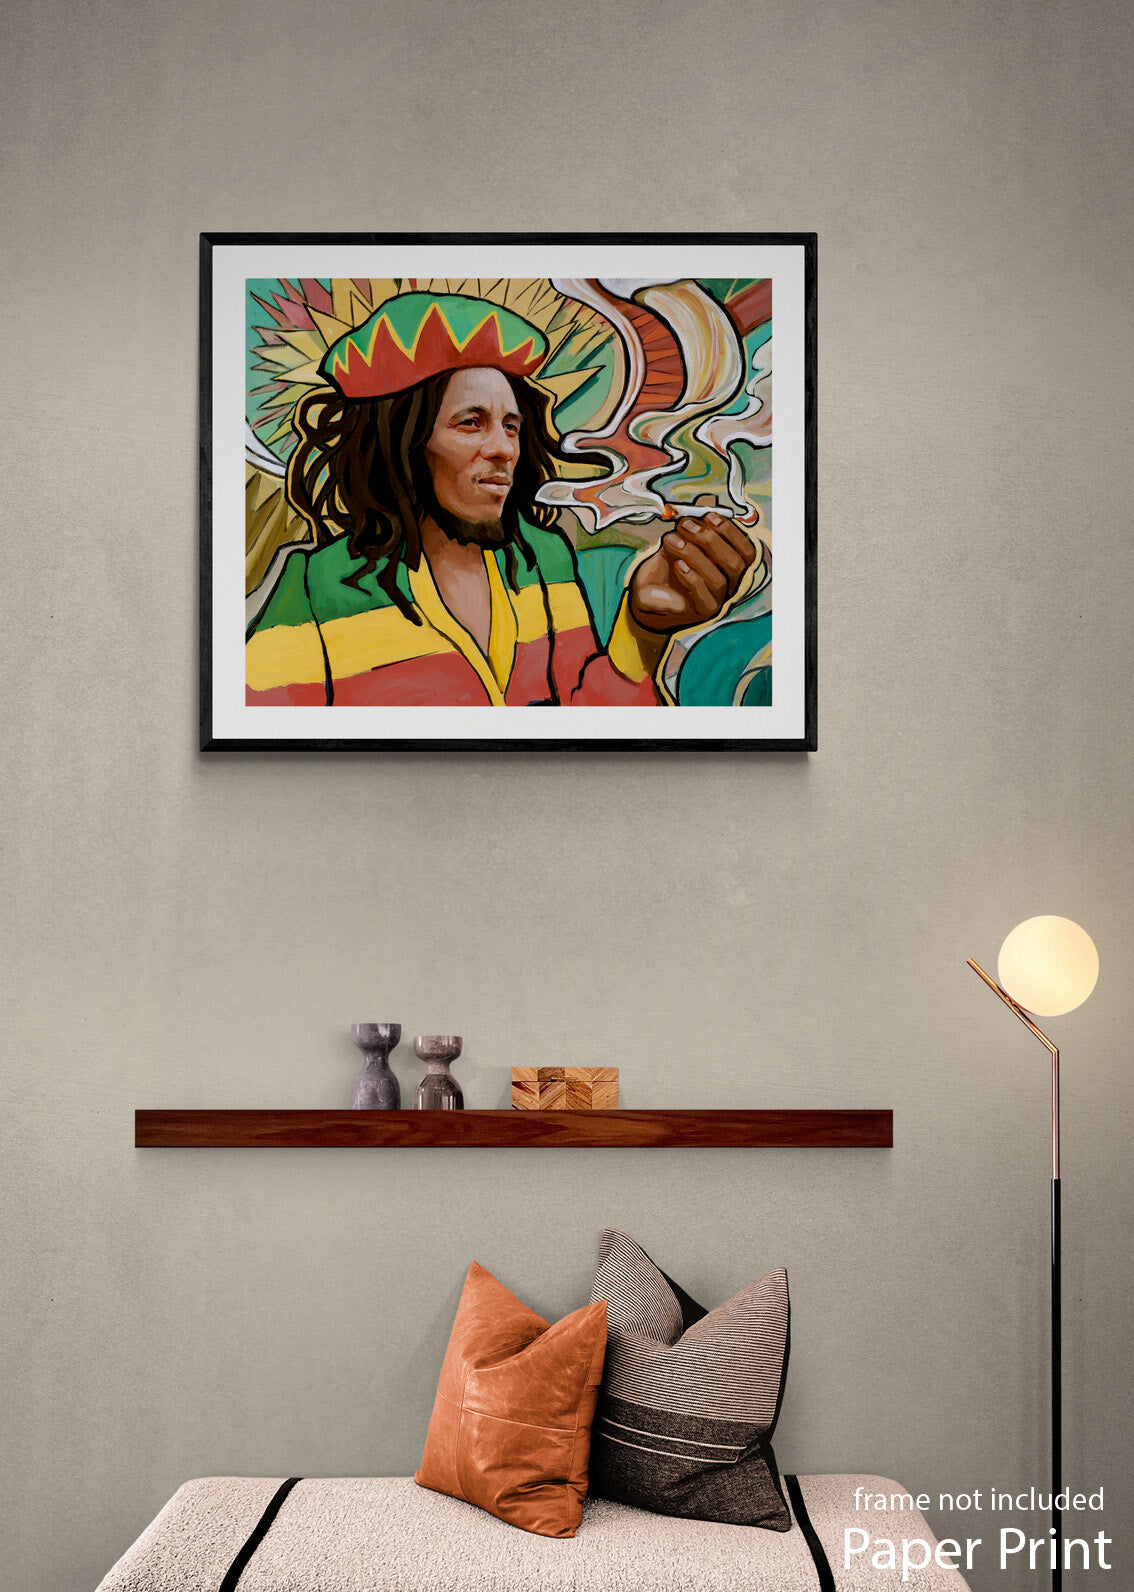 Bob Marley paper print by artist Justin Bua